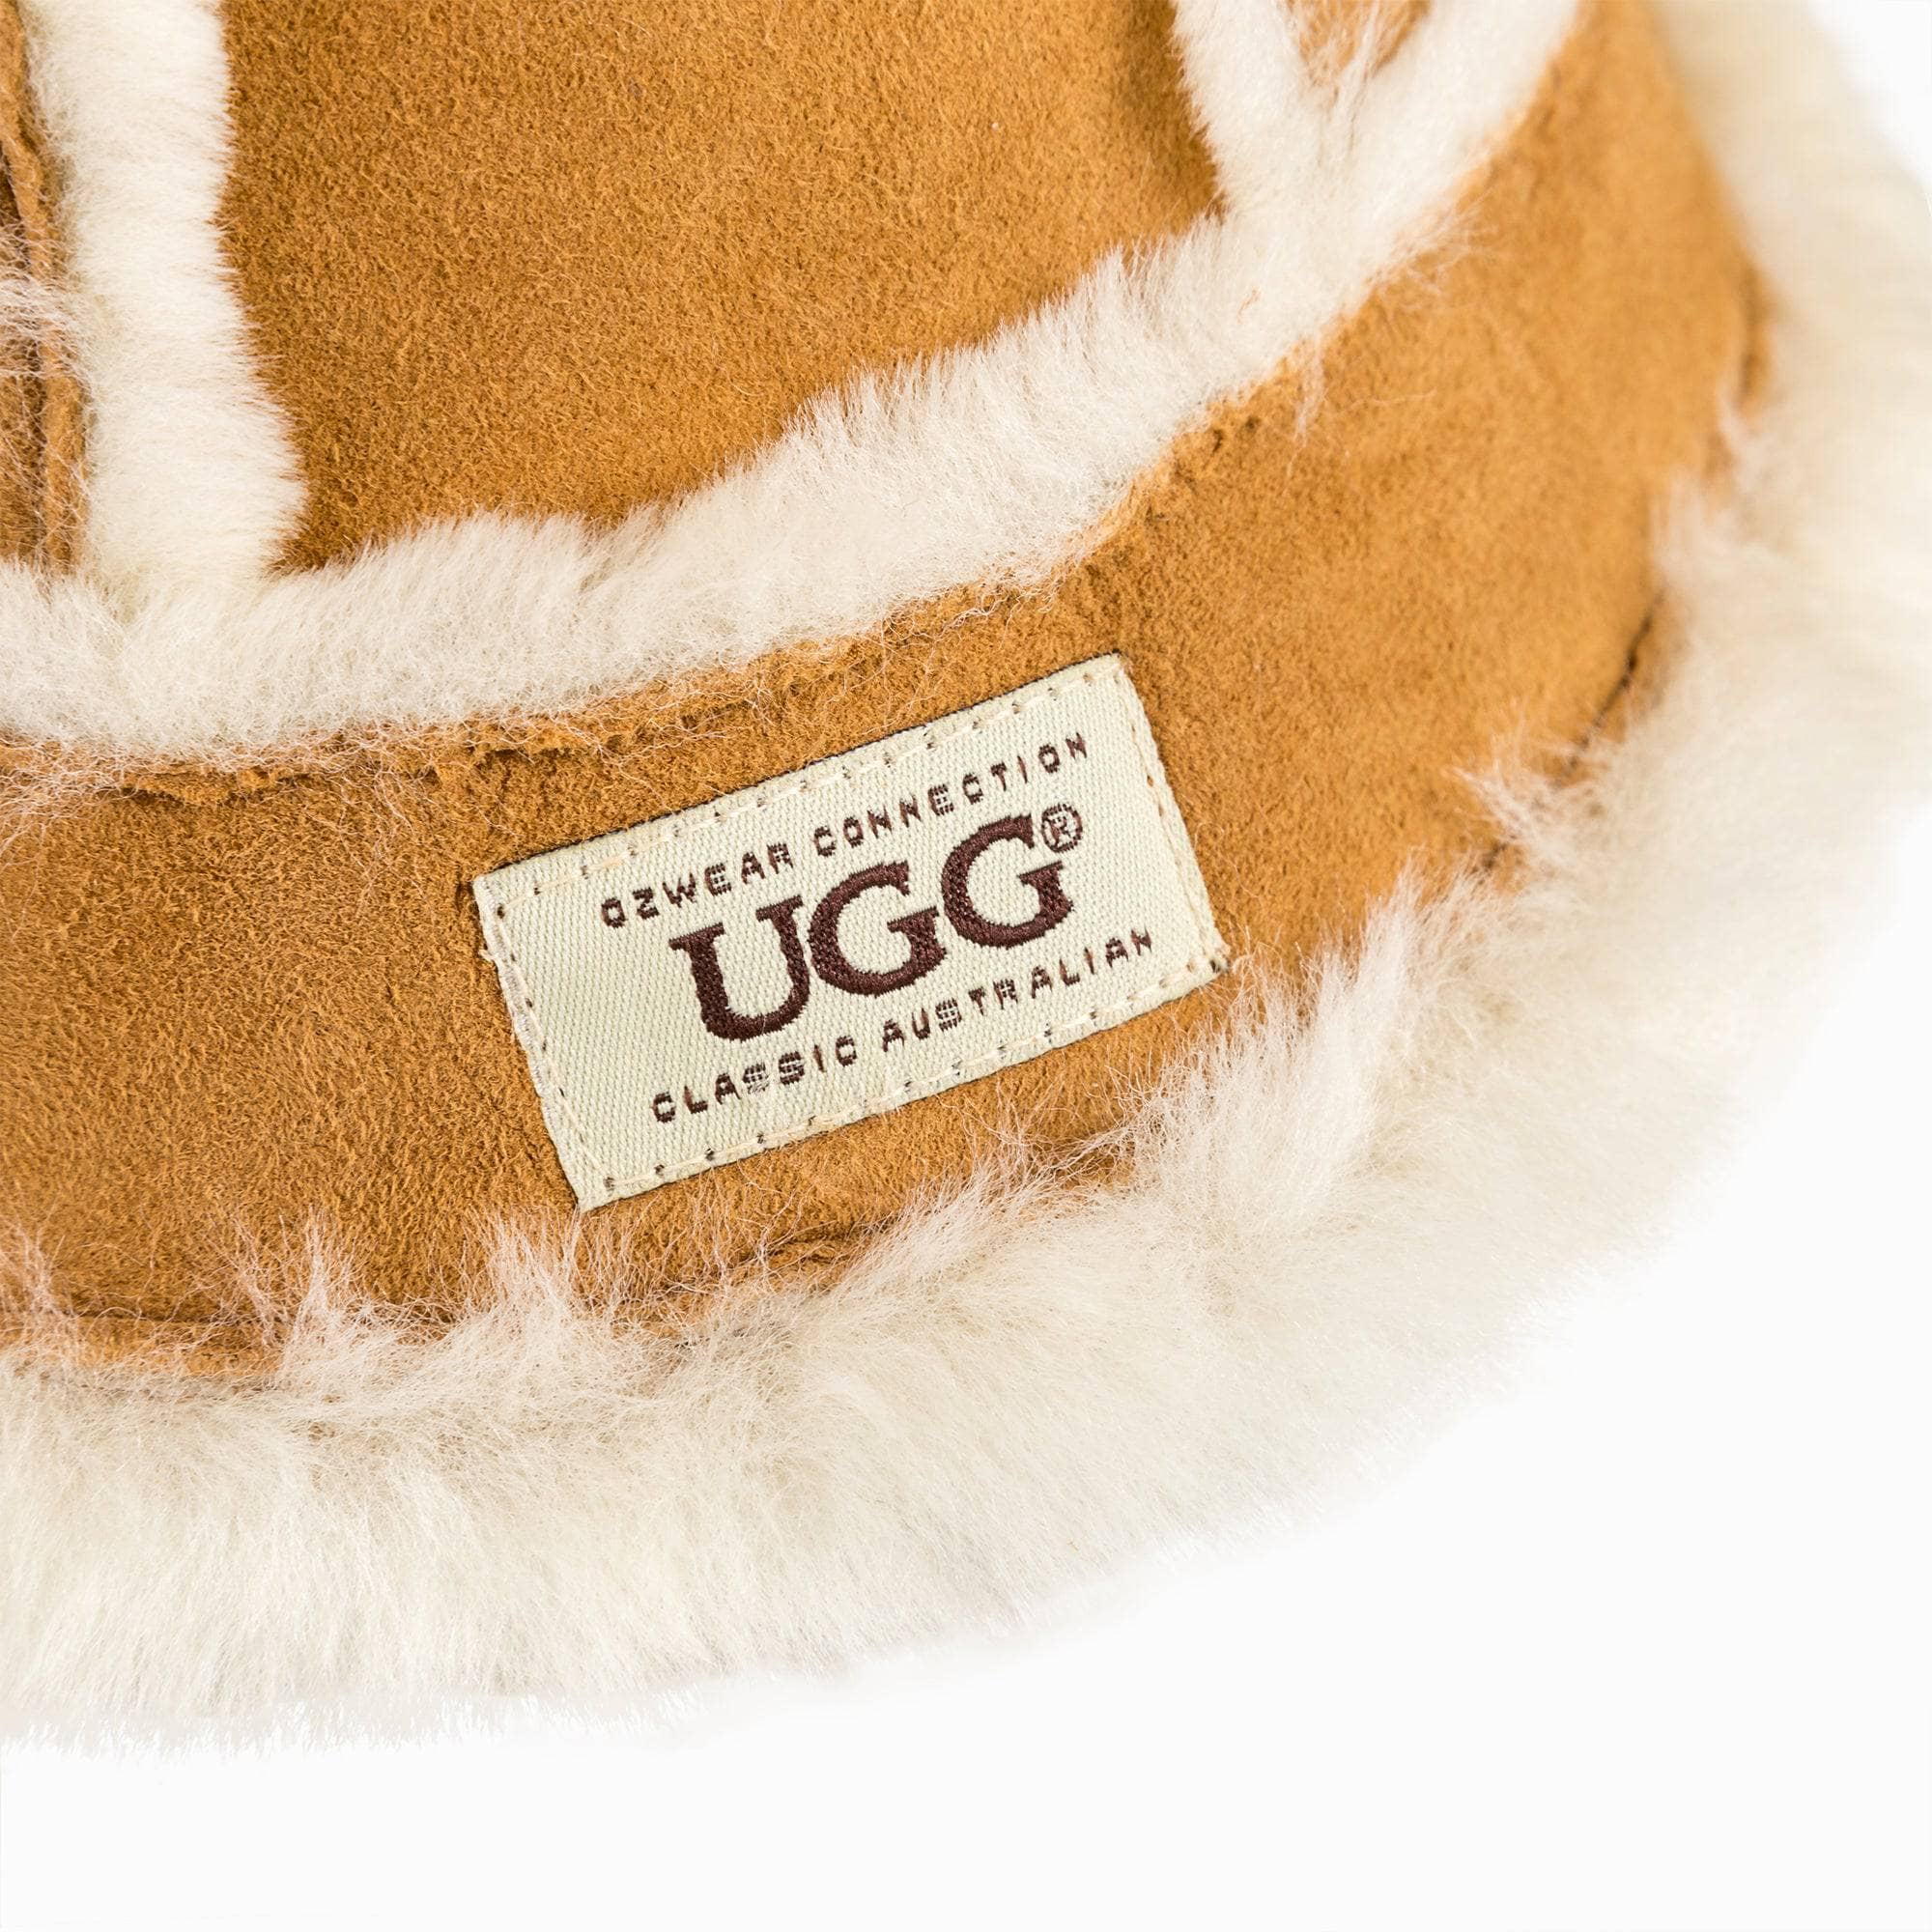  - UGG Buckle Hat - Original UGG Australia Classic